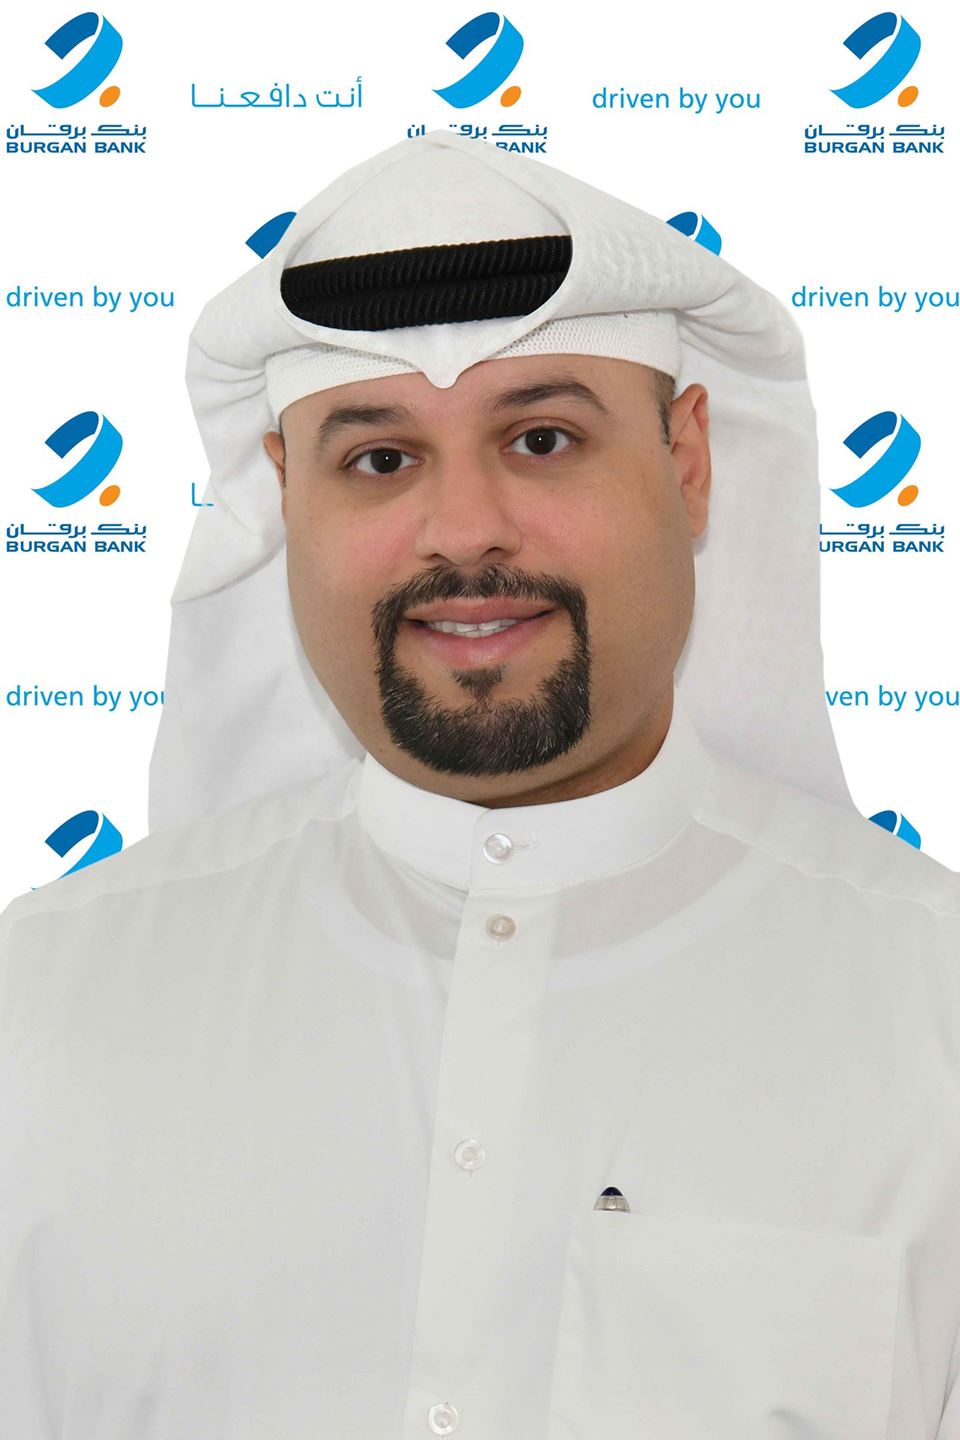 Mr. Khalil Majeed AlQattan, Head of Digital Transformation at Burgan Bank